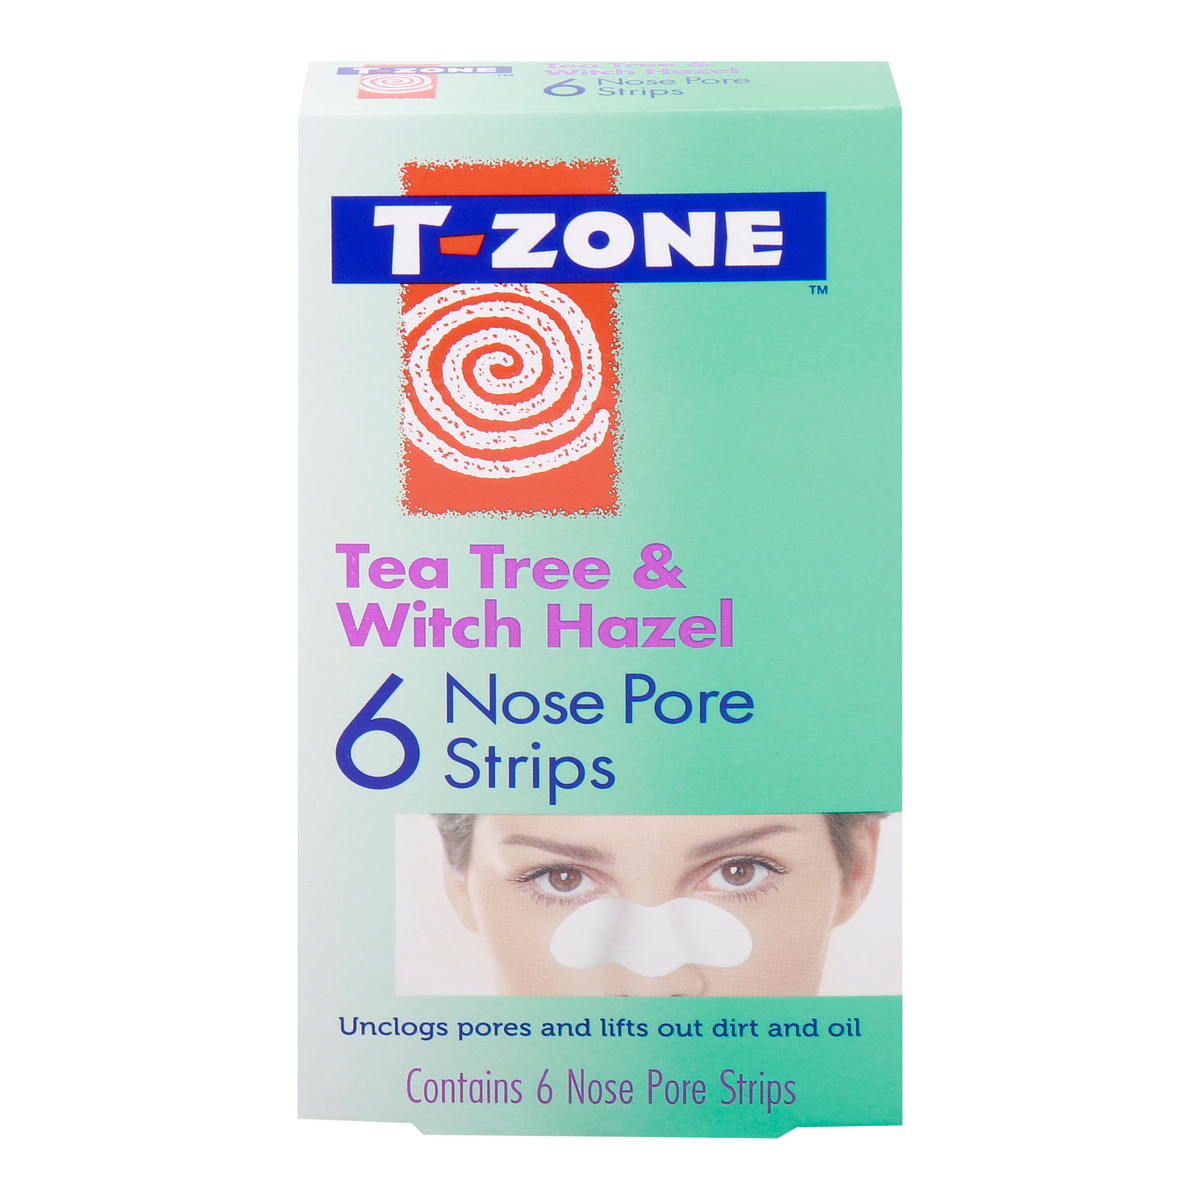 T-Zone Tea Tree & Witch Hazel Nose Pore Strips 6 pcs